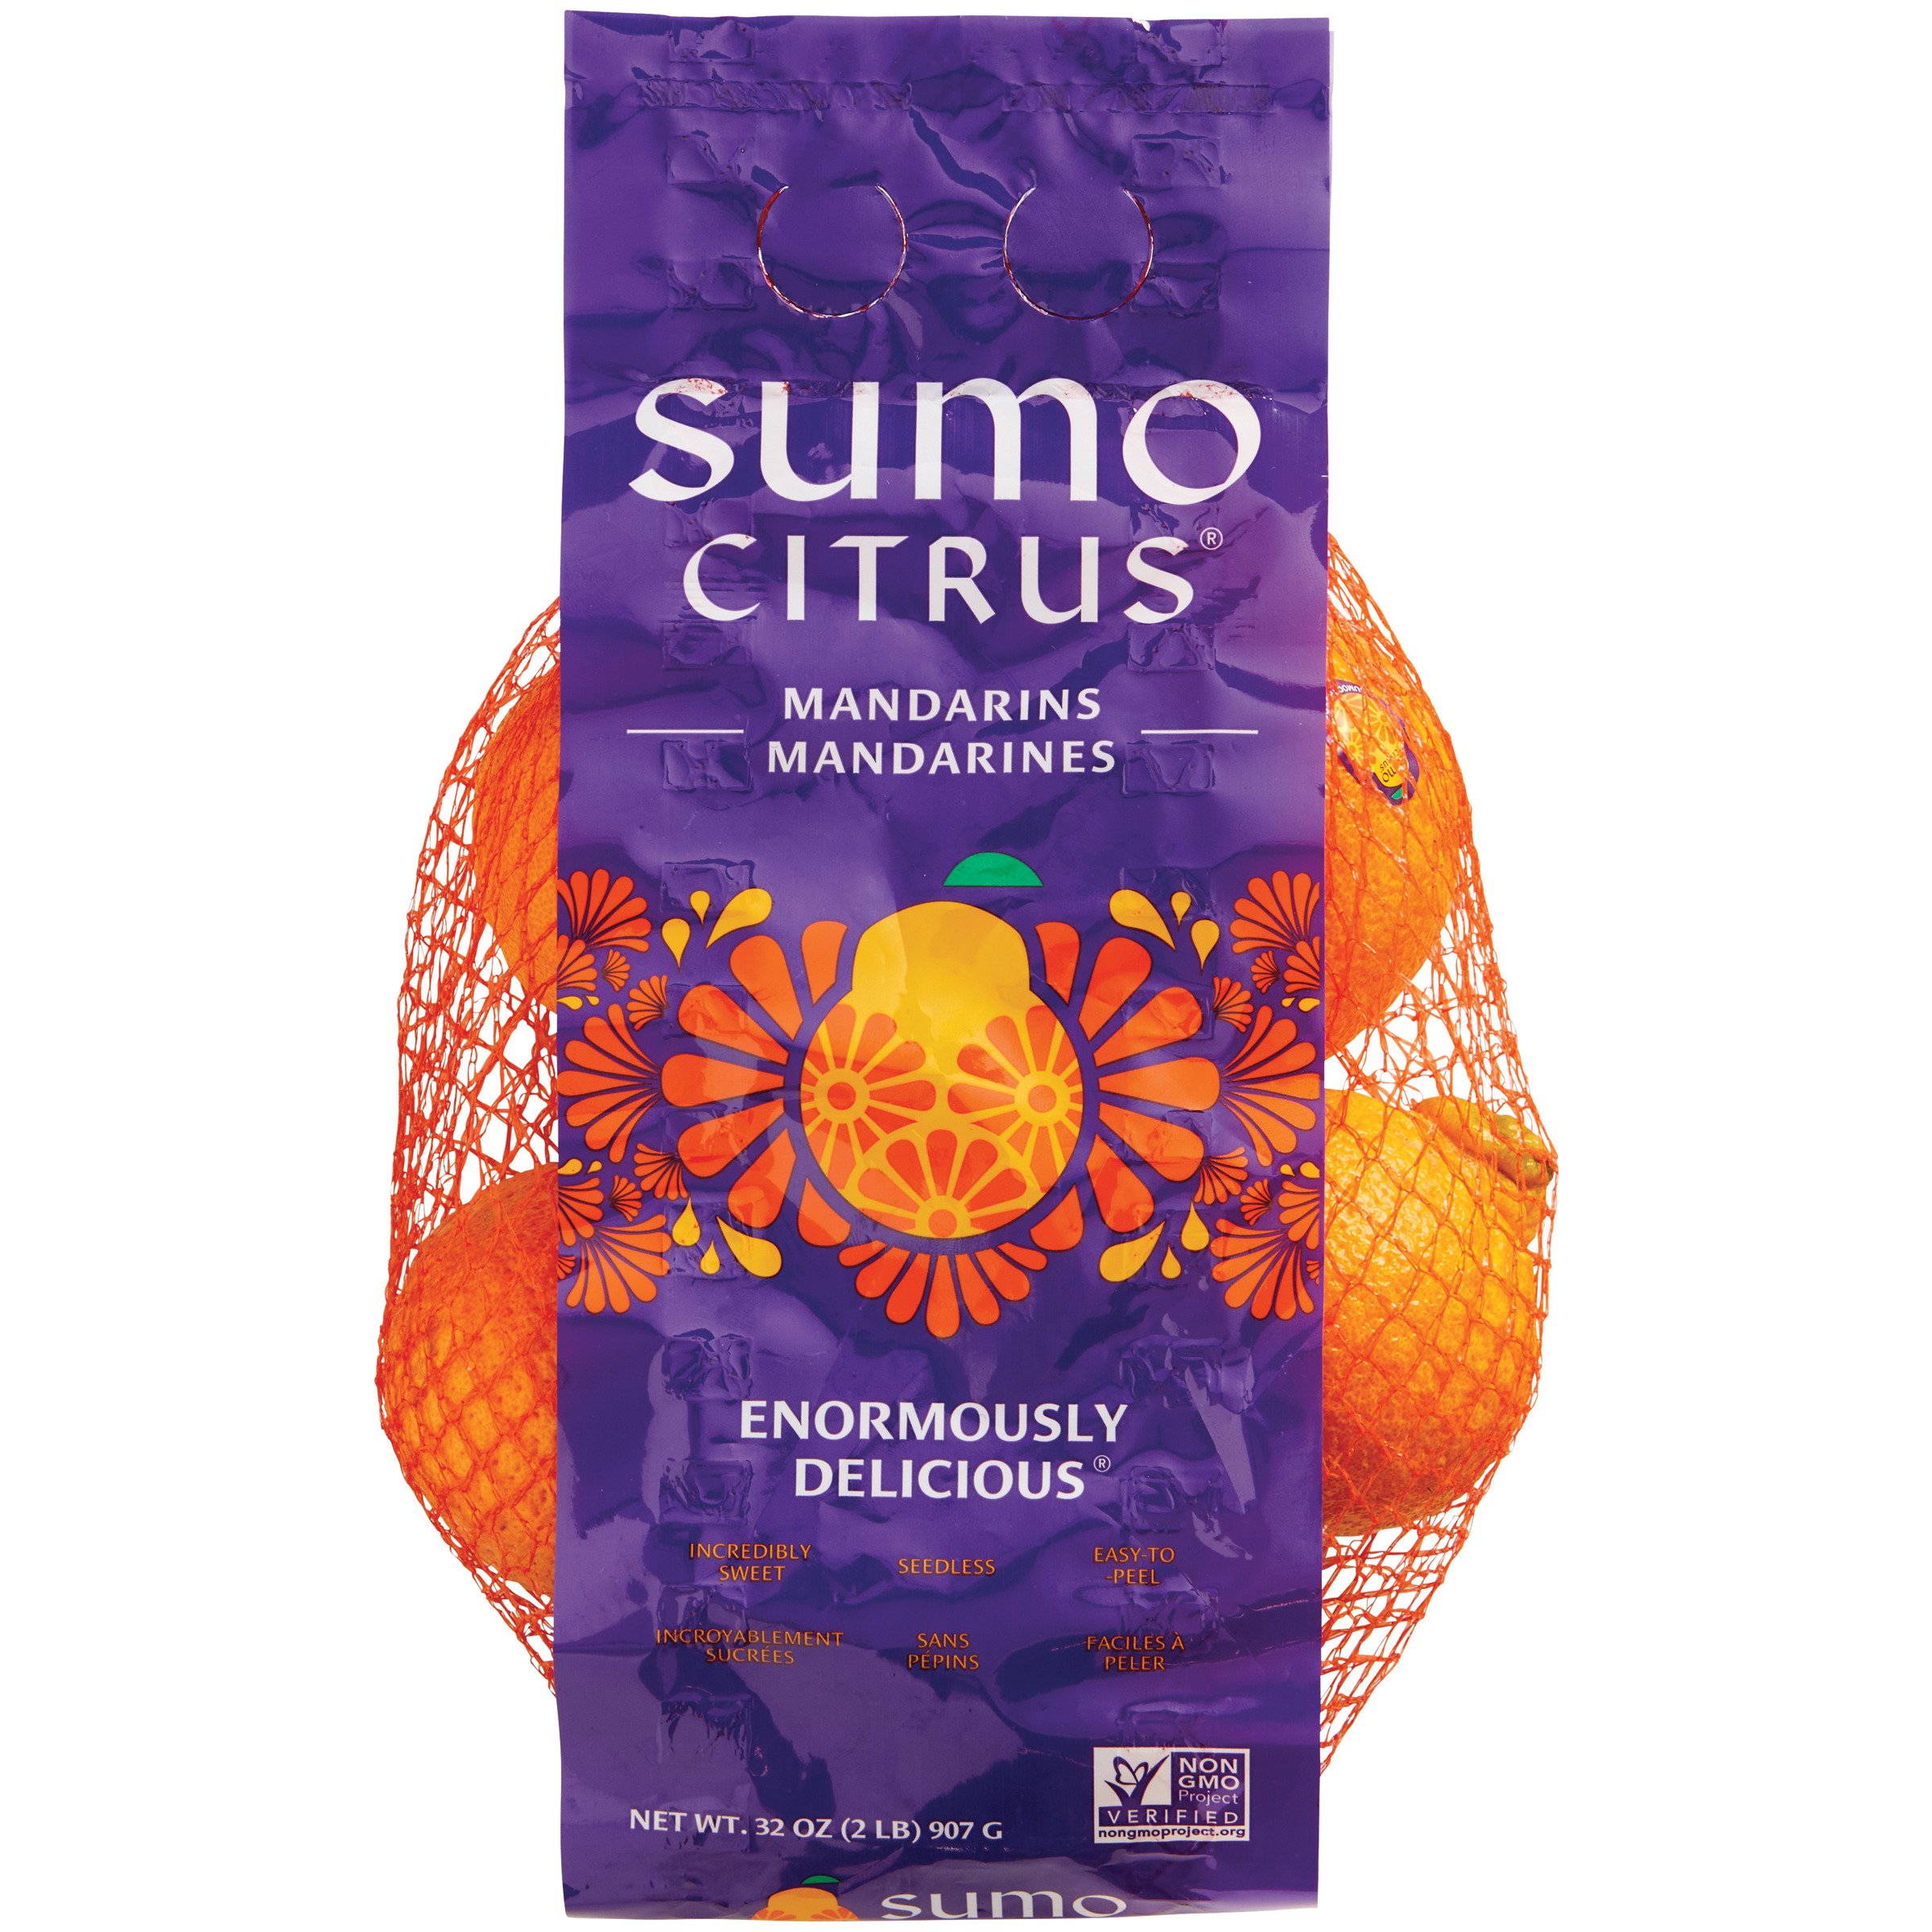 Sumo Citrus® Enormously Delicious® Mandarins - 6 pack